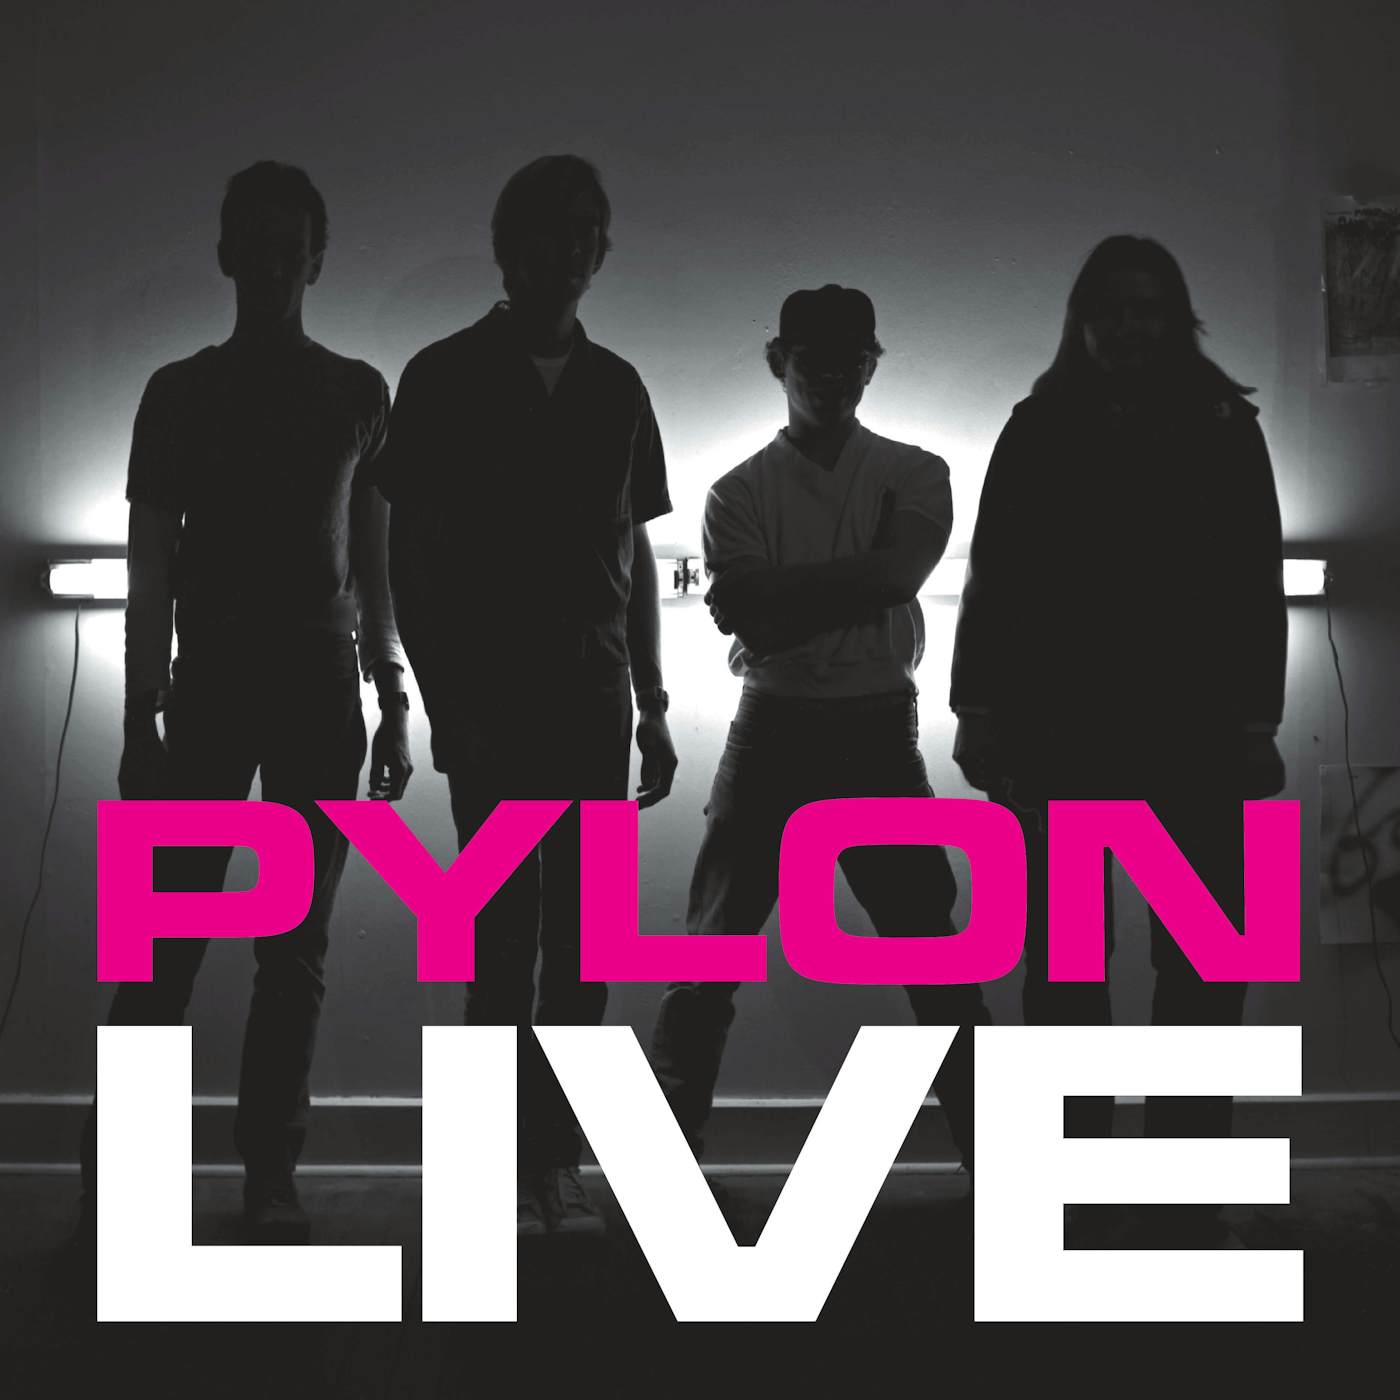 PYLON LIVE Vinyl Record